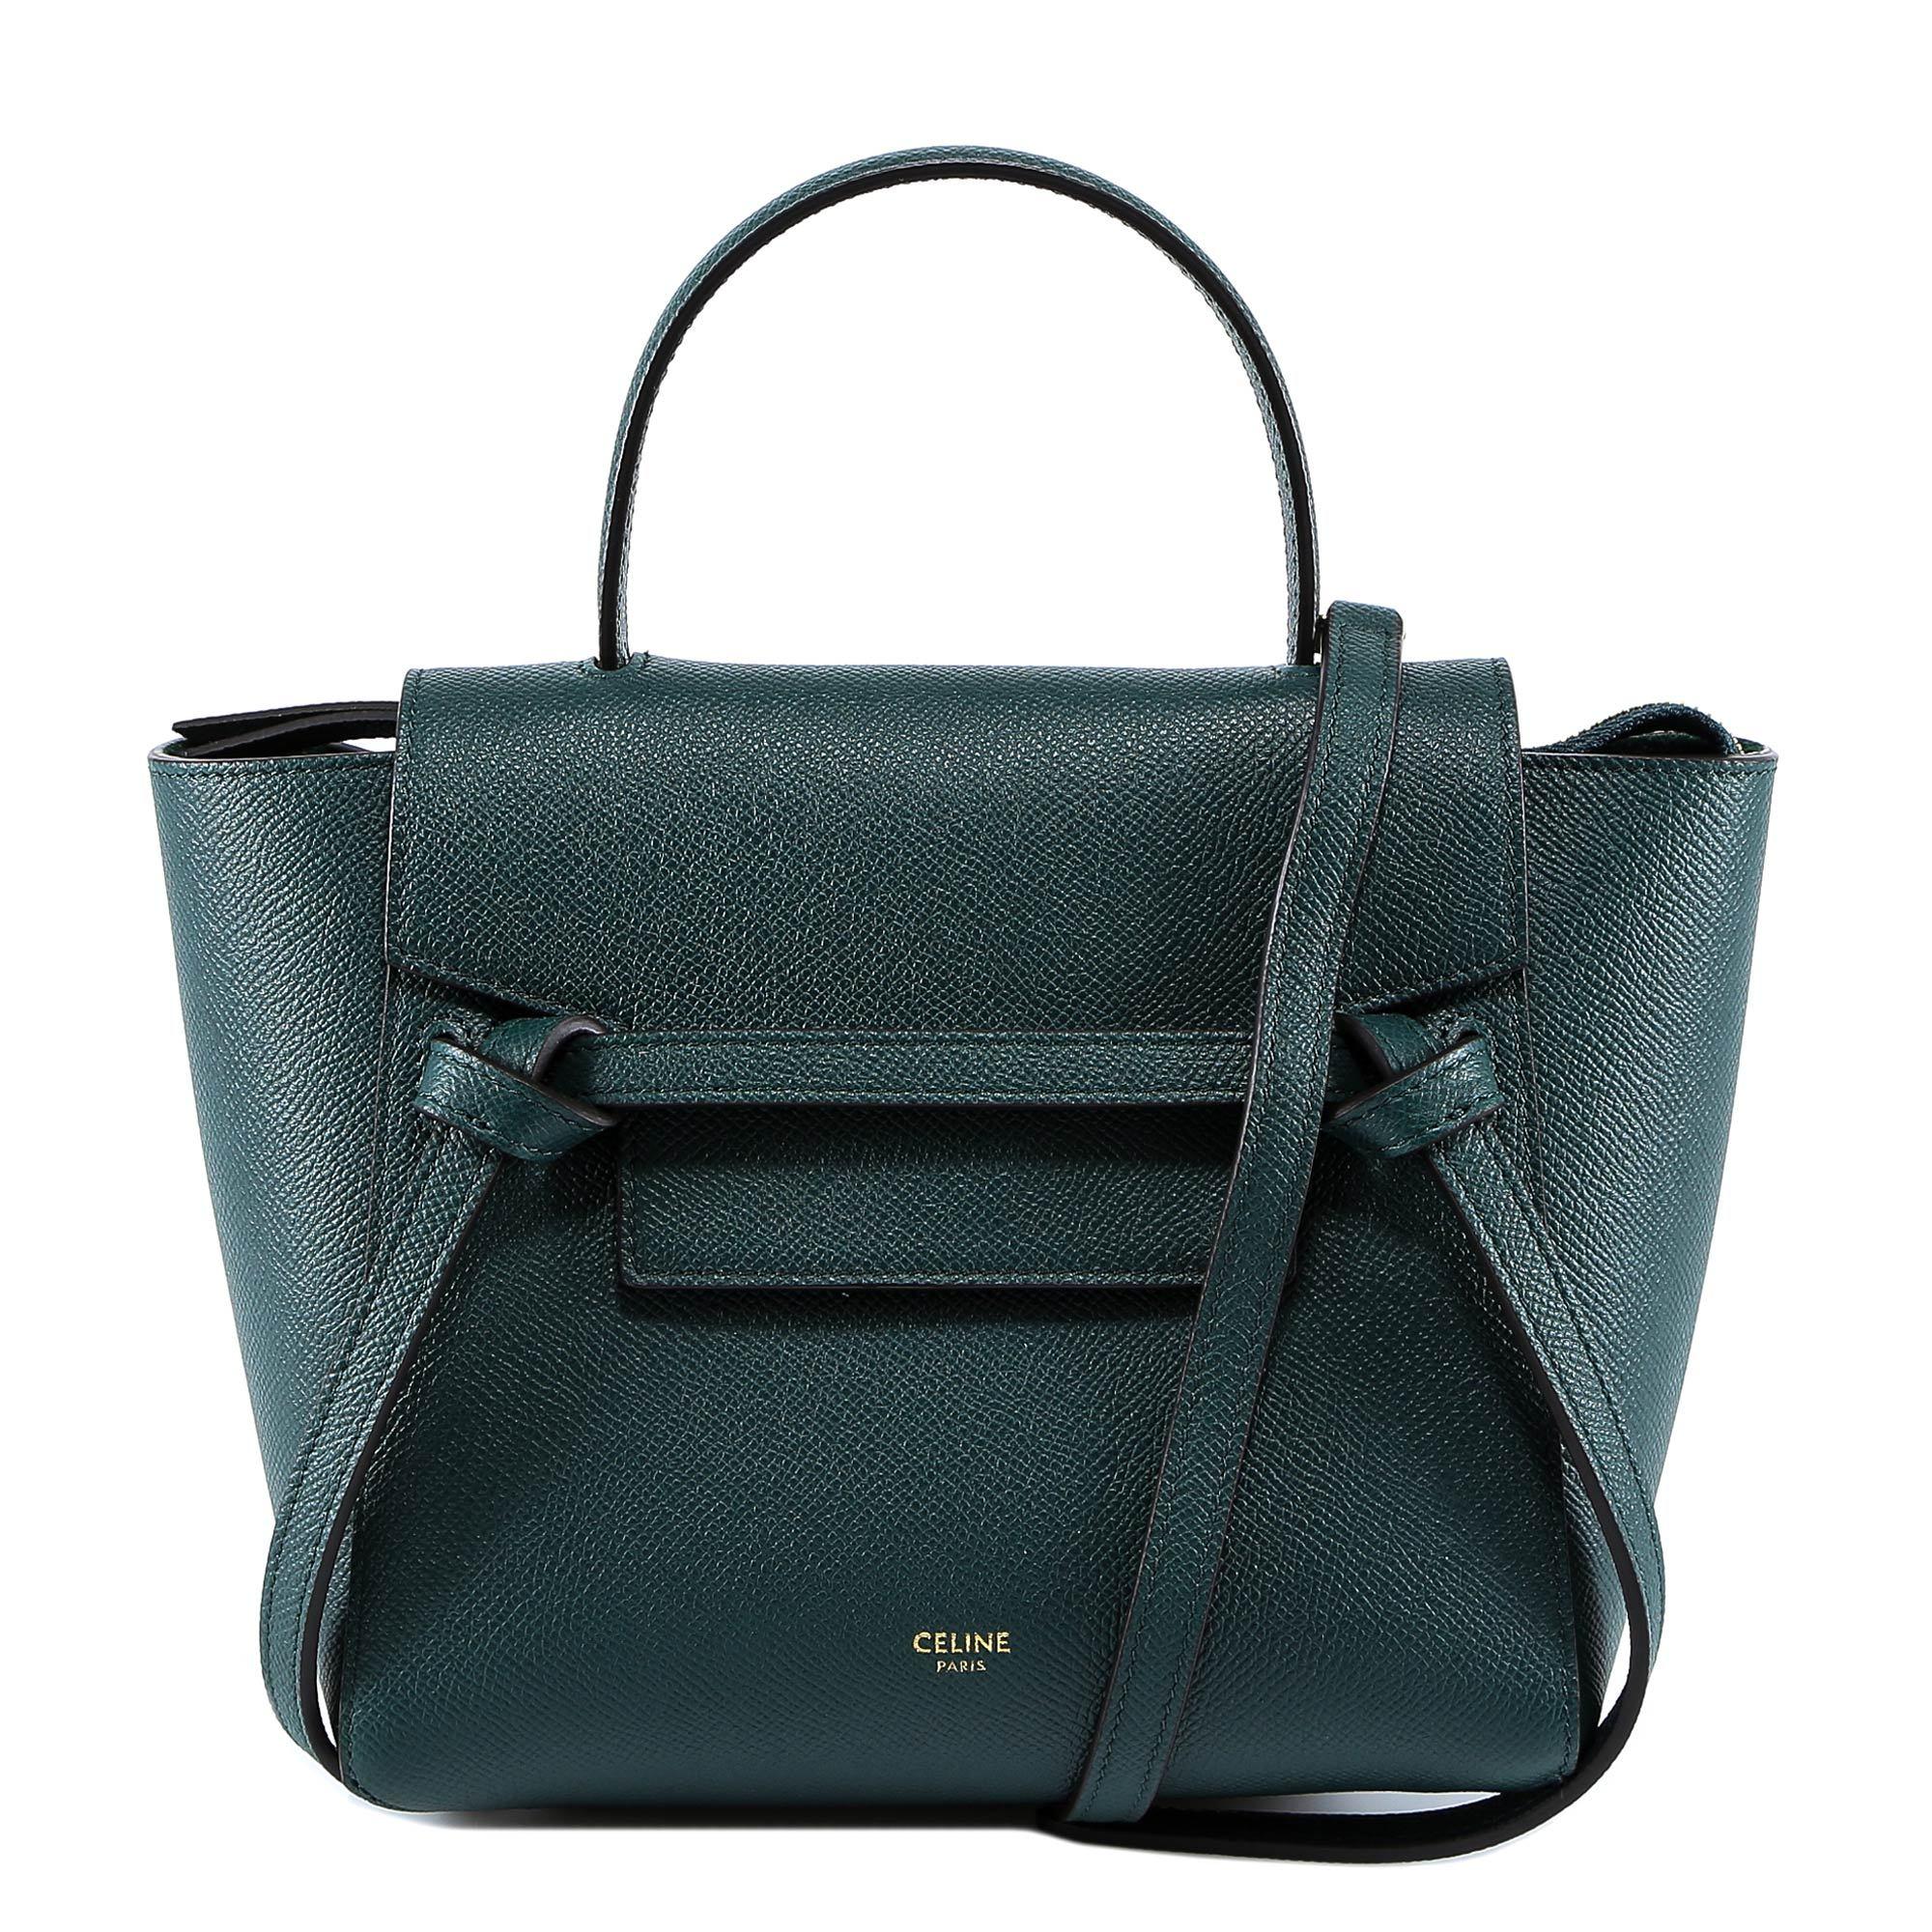 Céline Nano Belt Bag in Green - Lyst